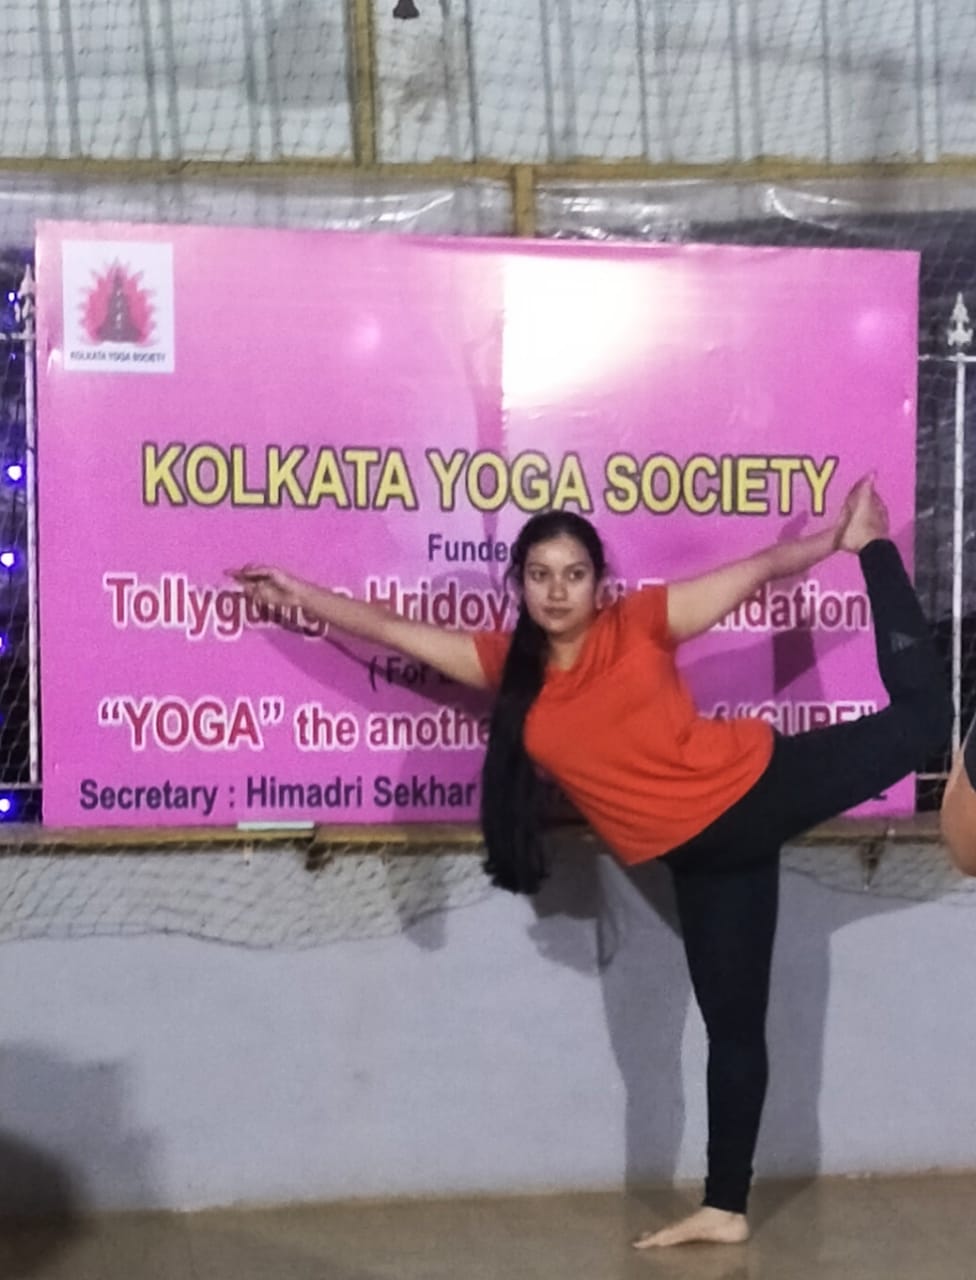 Kolkata Yoga Society